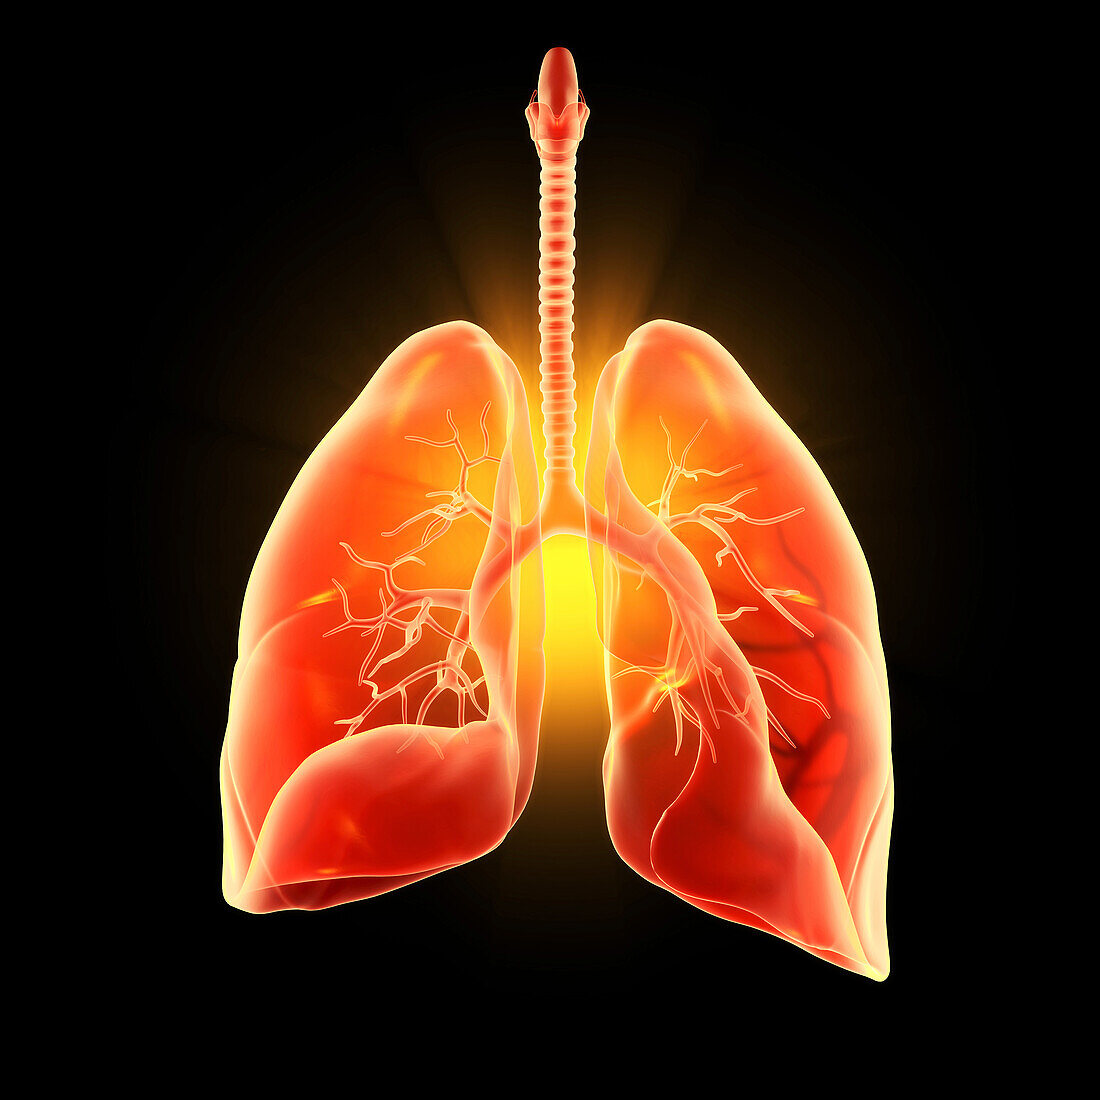 Human lungs, pneumonia, illustration